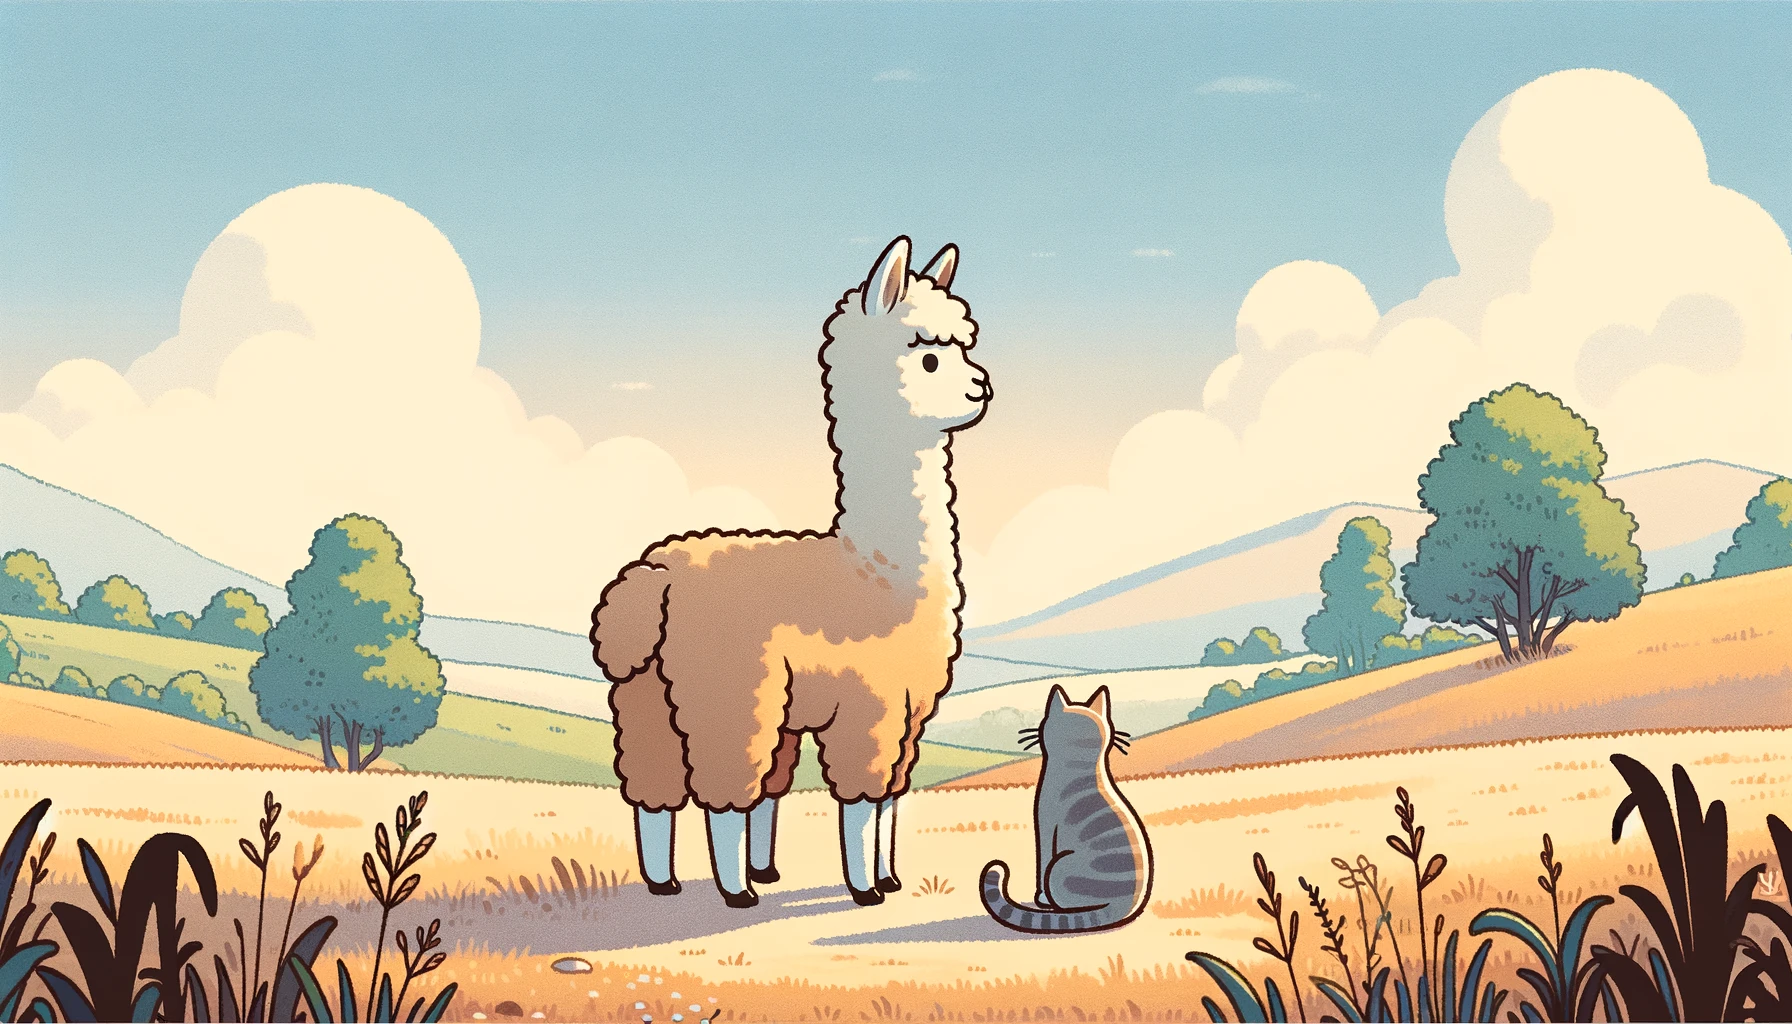 Cat and alpaca together